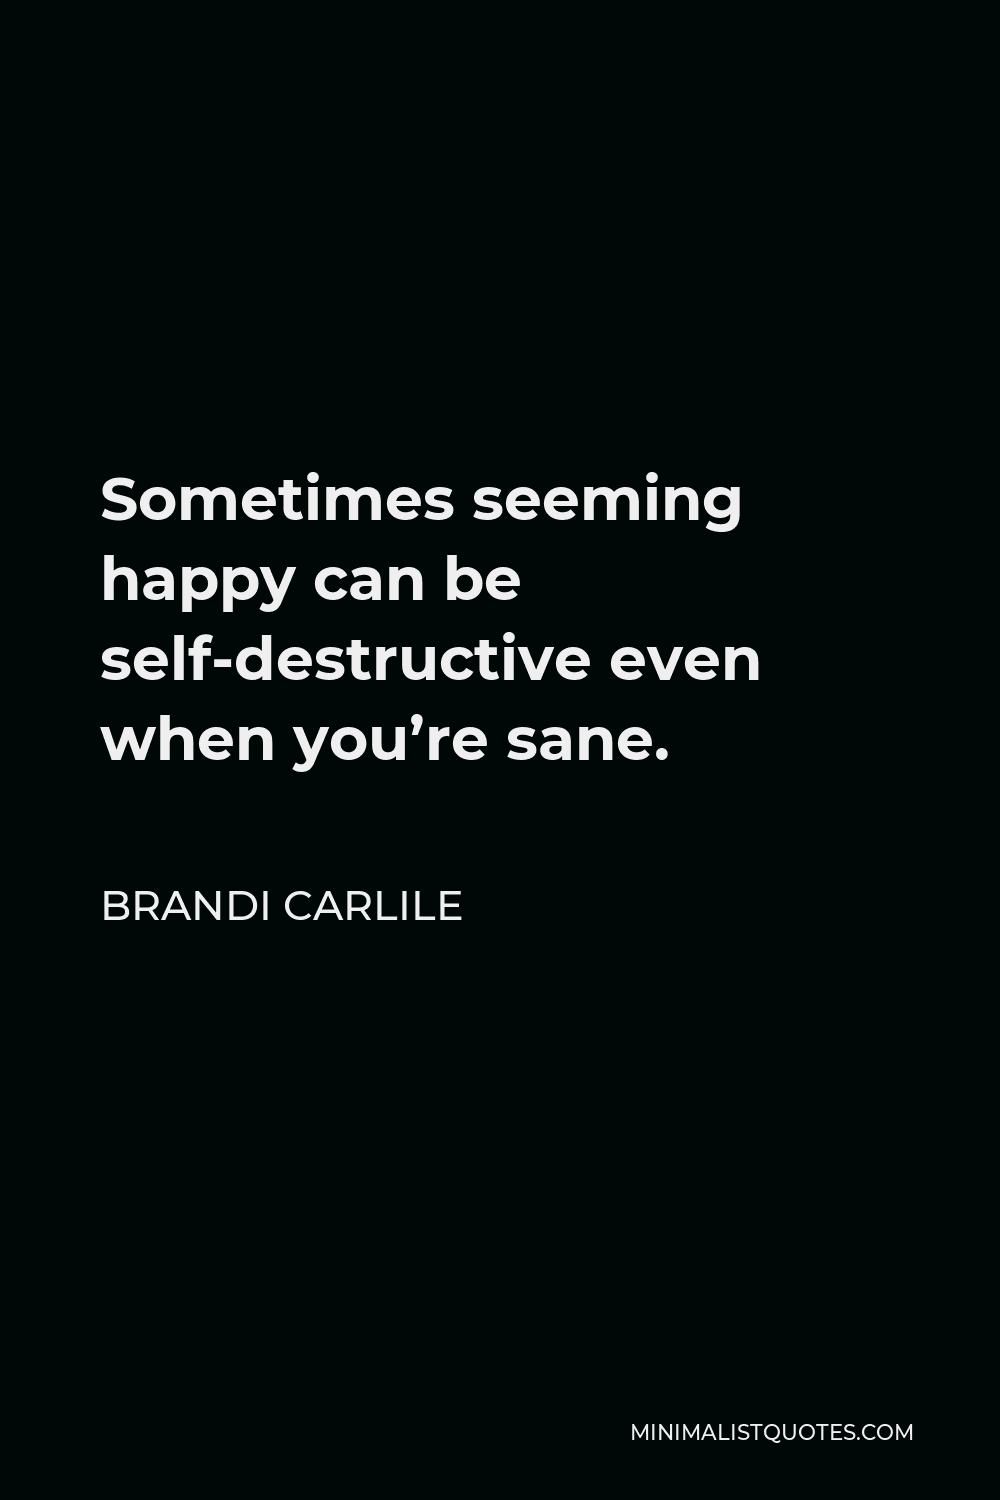 Brandi Carlile Quote - Sometimes seeming happy can be self-destructive even when you’re sane.